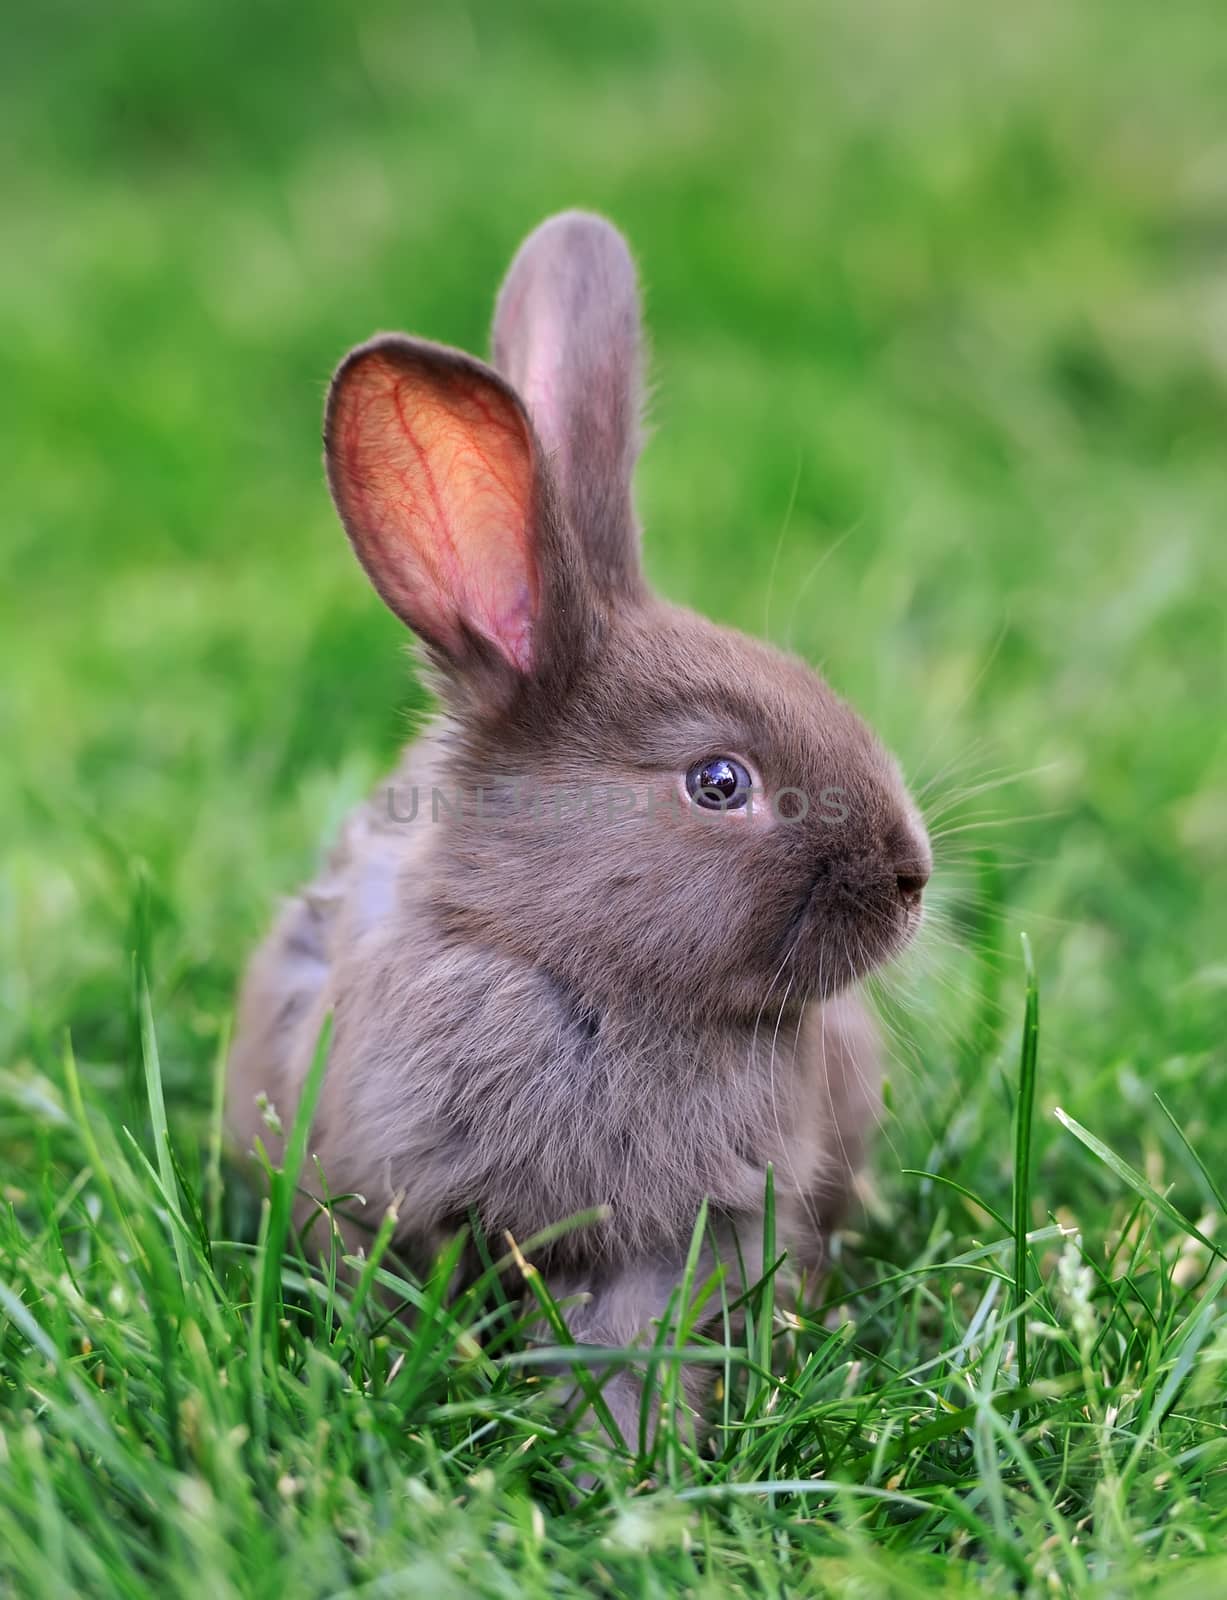 Little rabbit on green grass in summer day